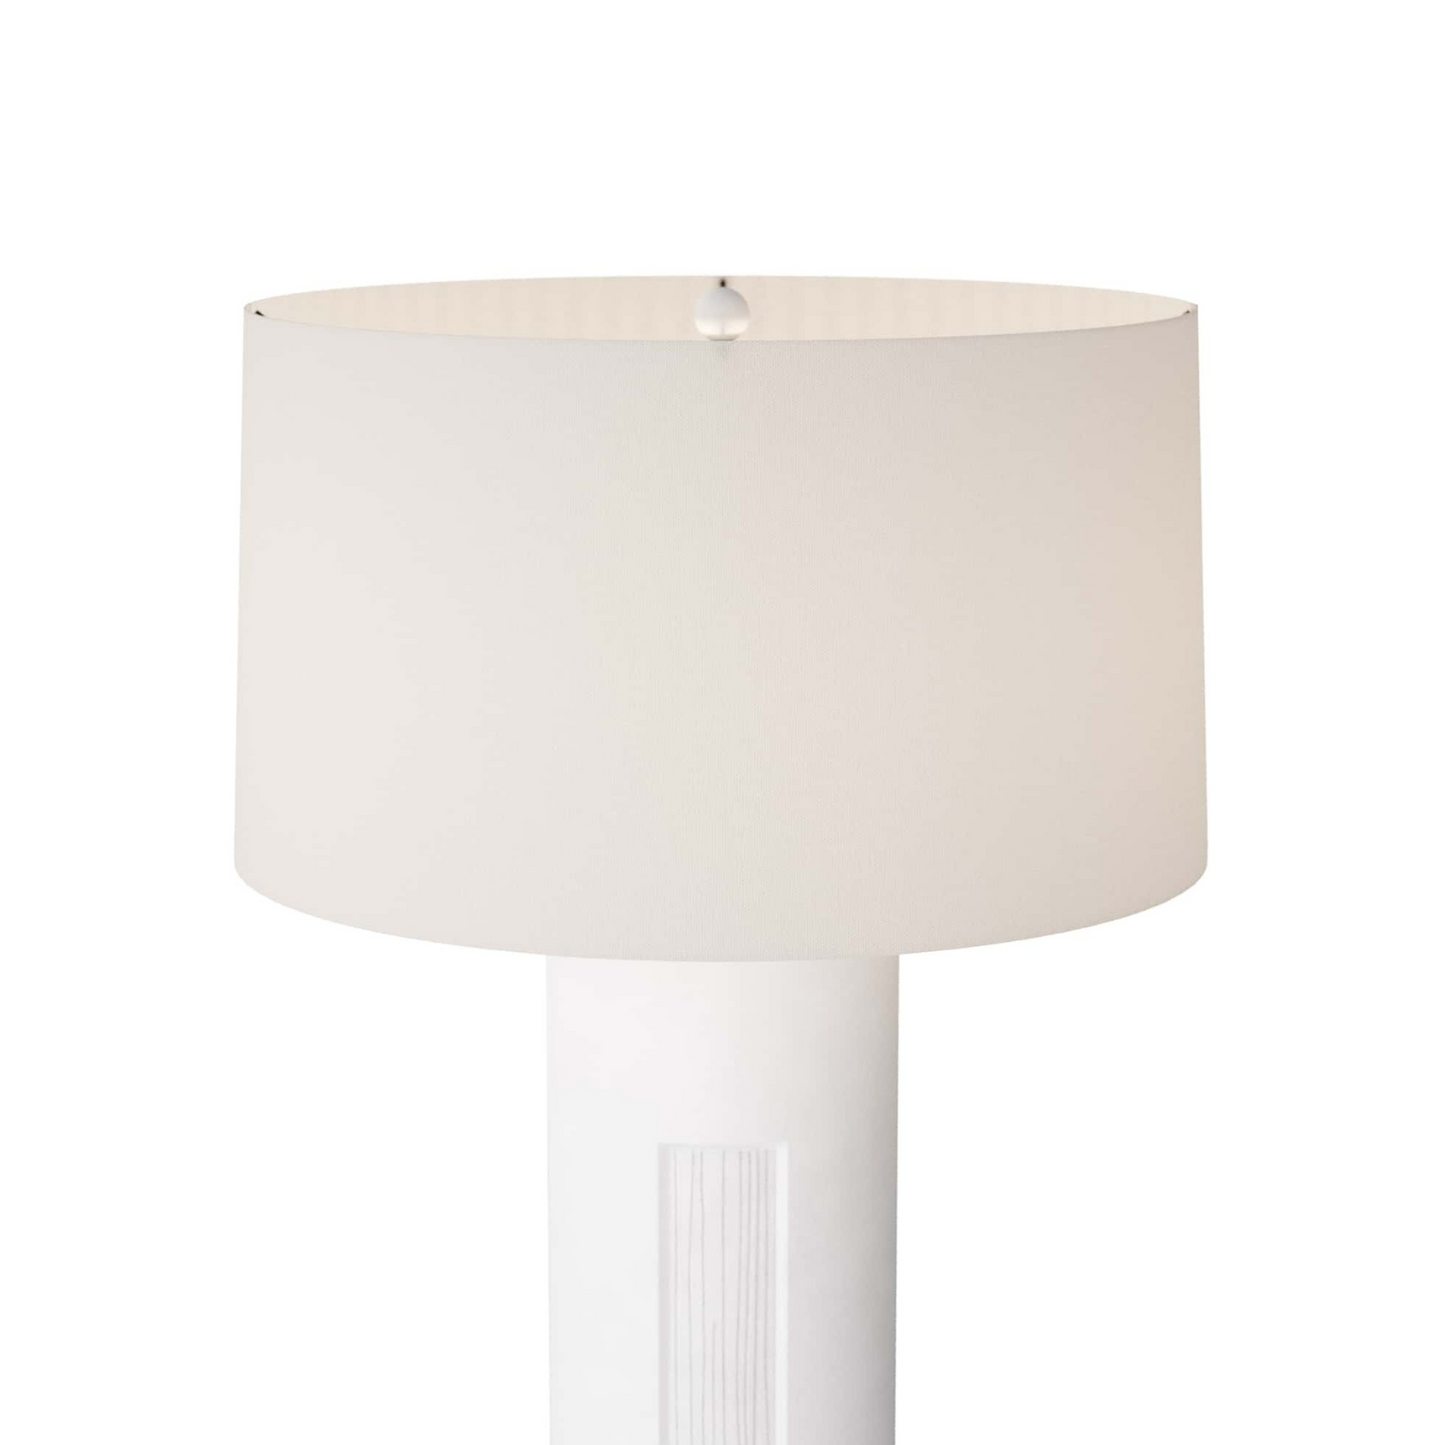 Wyatt Lamp - Elegant Indoor Lighting with Rolled Edges and Hardback Shade